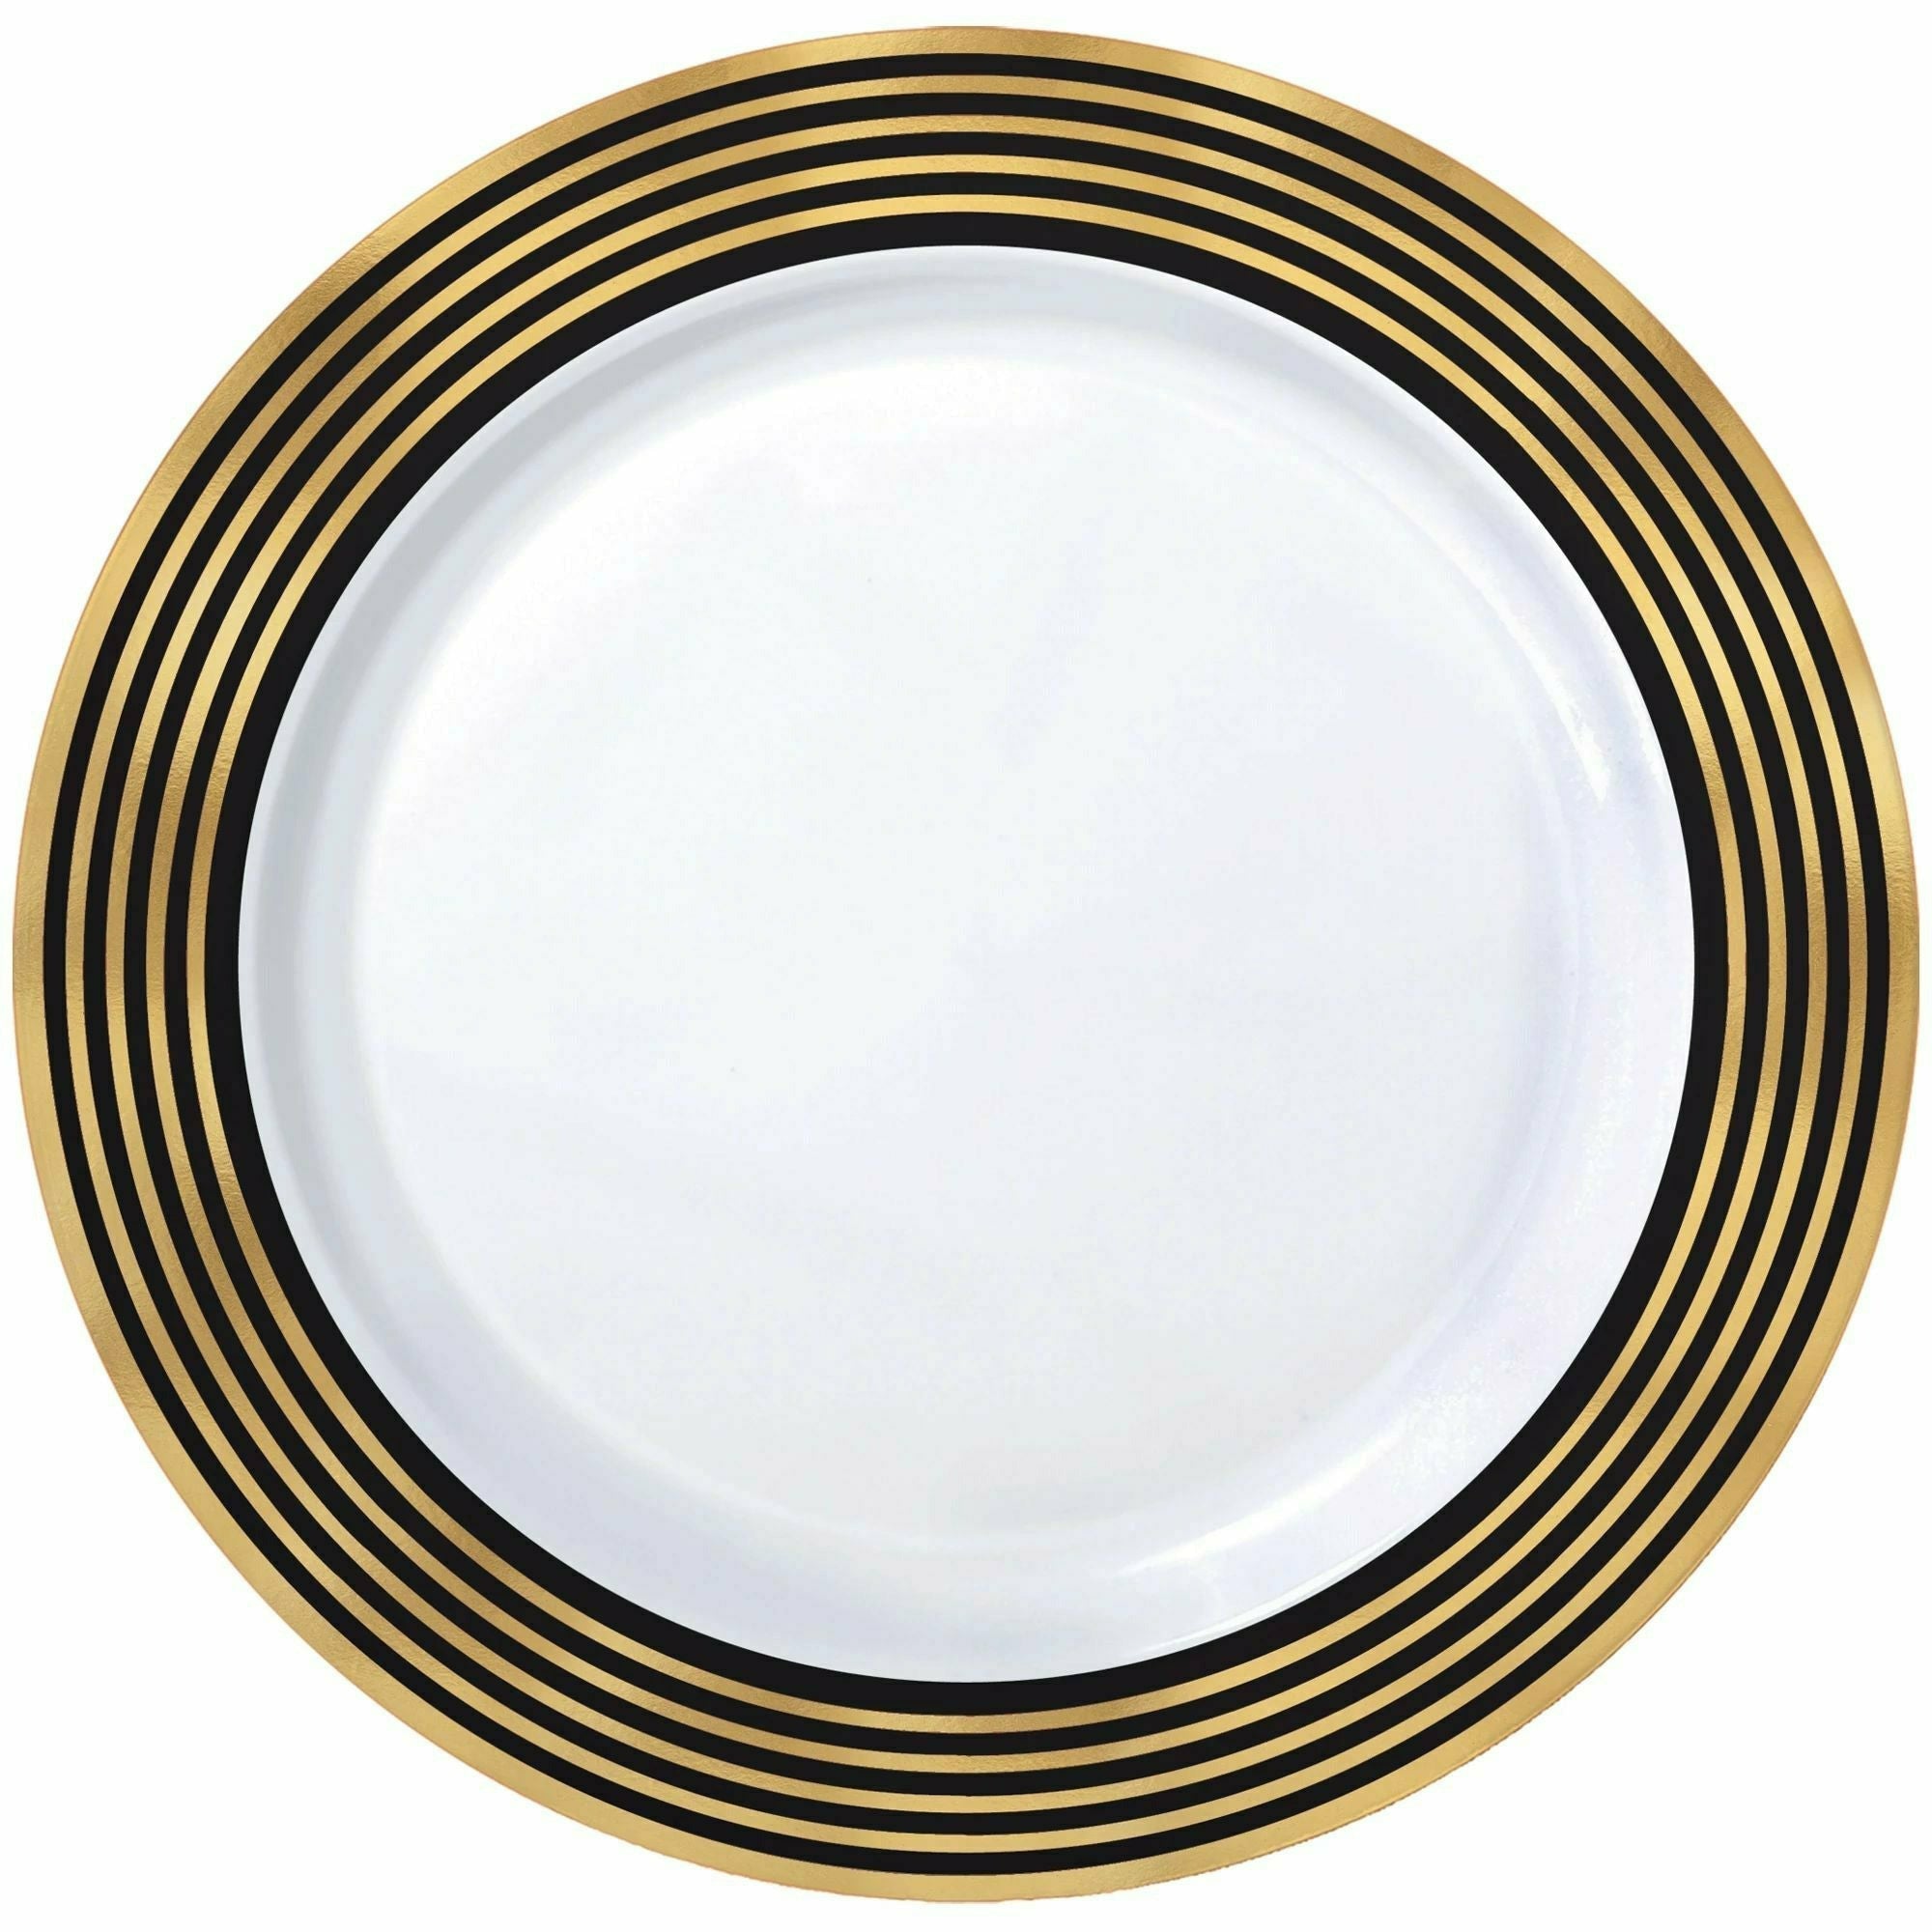 Amscan BASIC Premium 10 1/4" Hot-Stamped Plastic Plate Gold Stripe